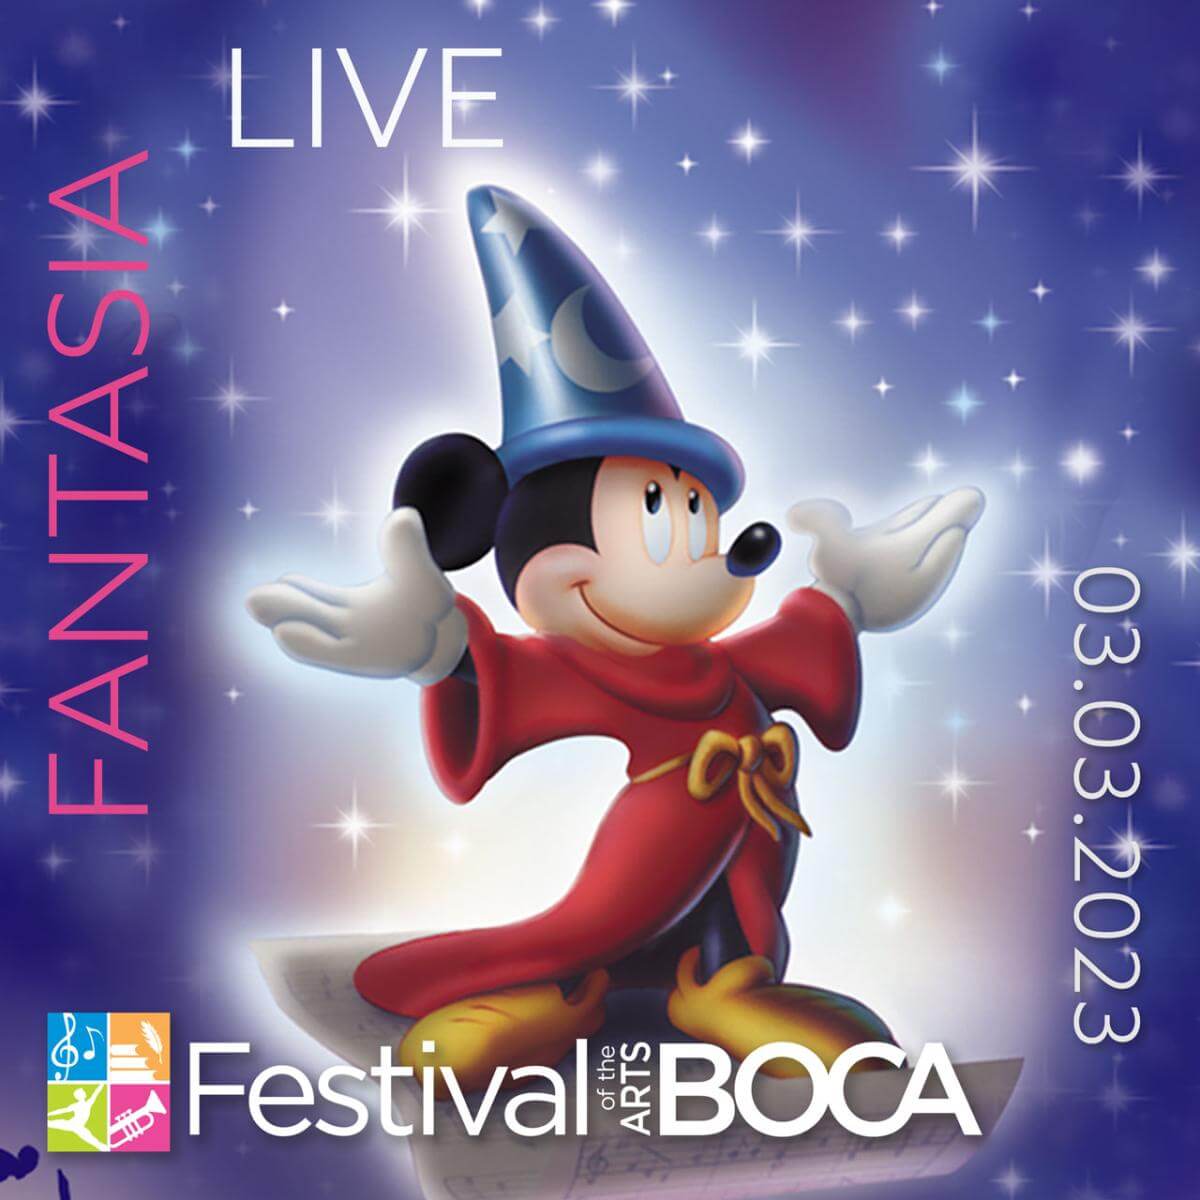 Fantasia orchestra at the Festival of the Arts in Boca Raton